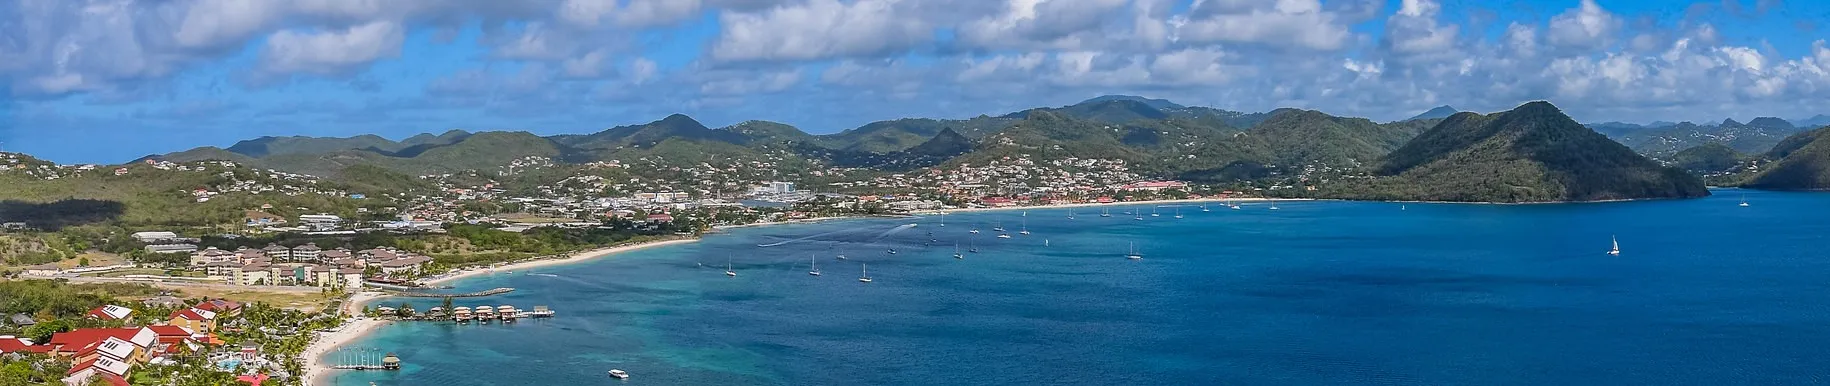 Saint Lucia Banner Image